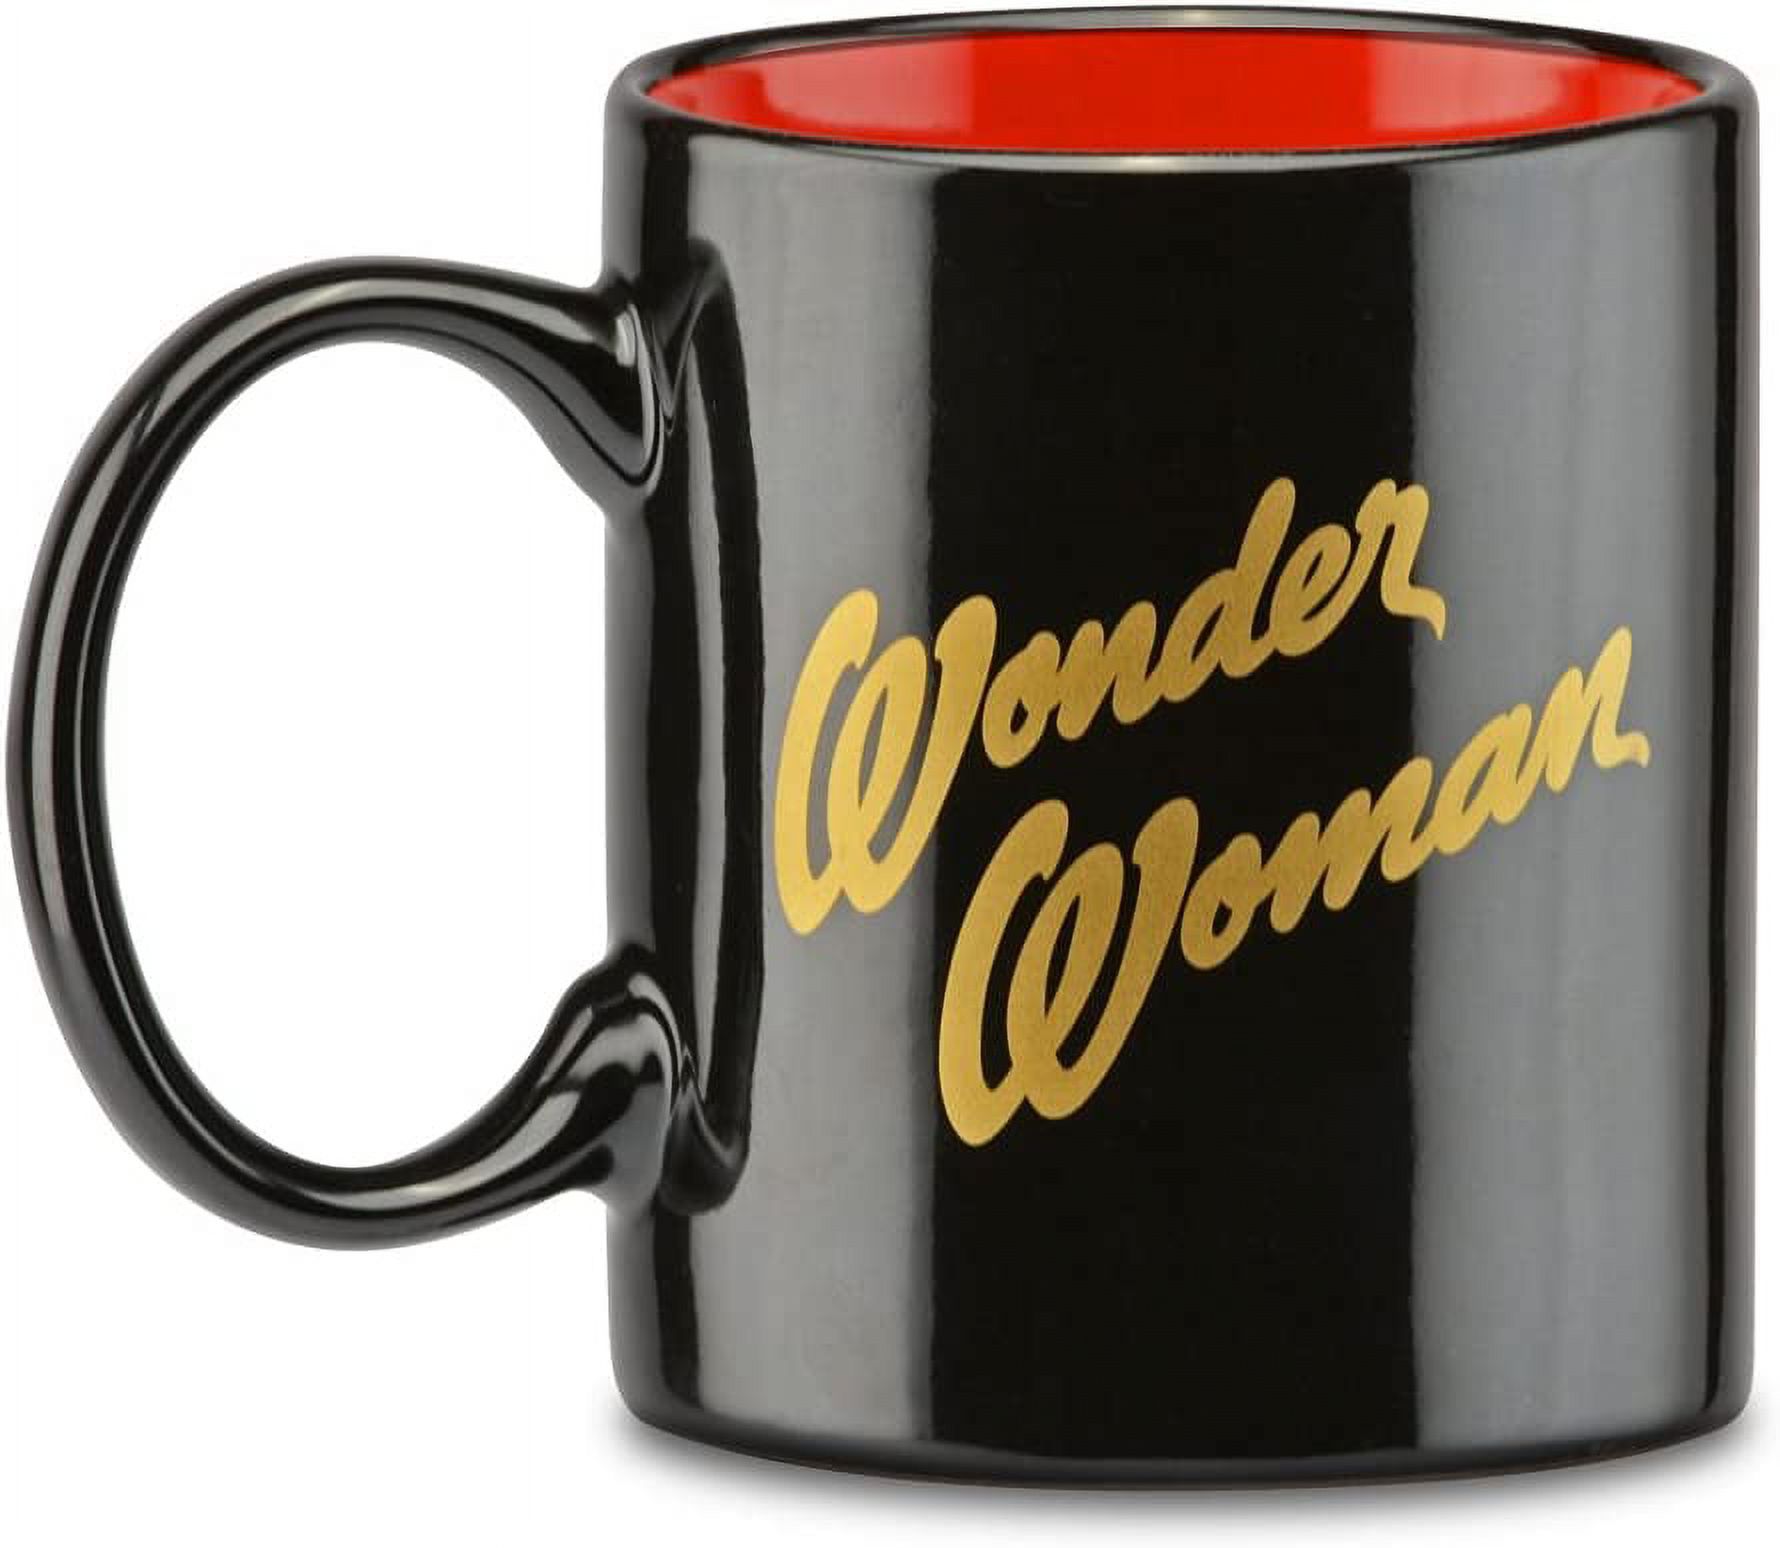 DC Wonder Woman 1-Cup Coffee Maker with Mug - image 2 of 3